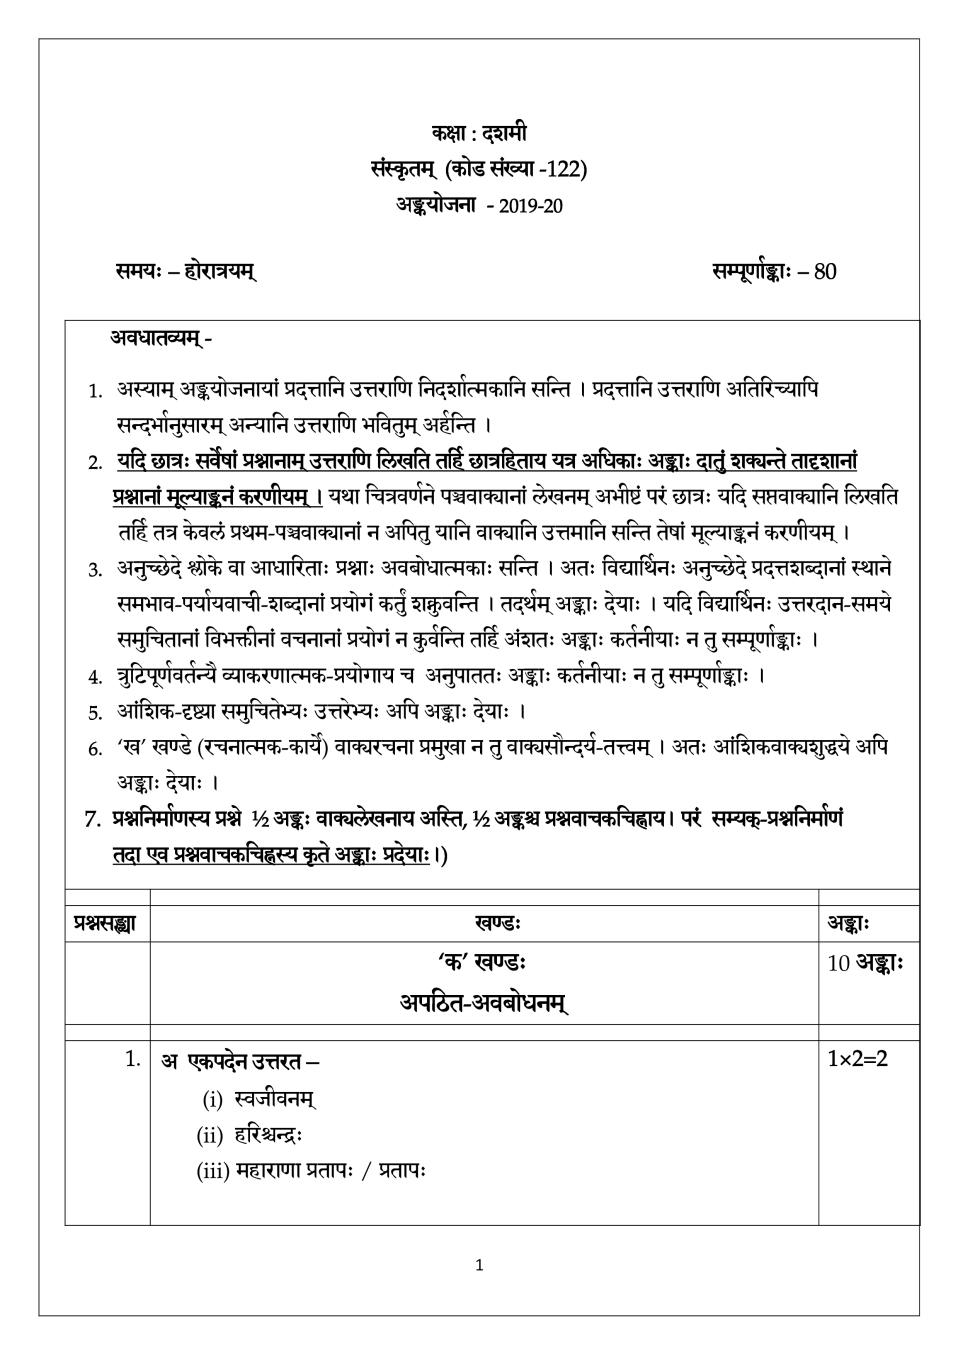 CBSE Class 10 Marking Scheme 2020 for Sanskrit Core - Page 1